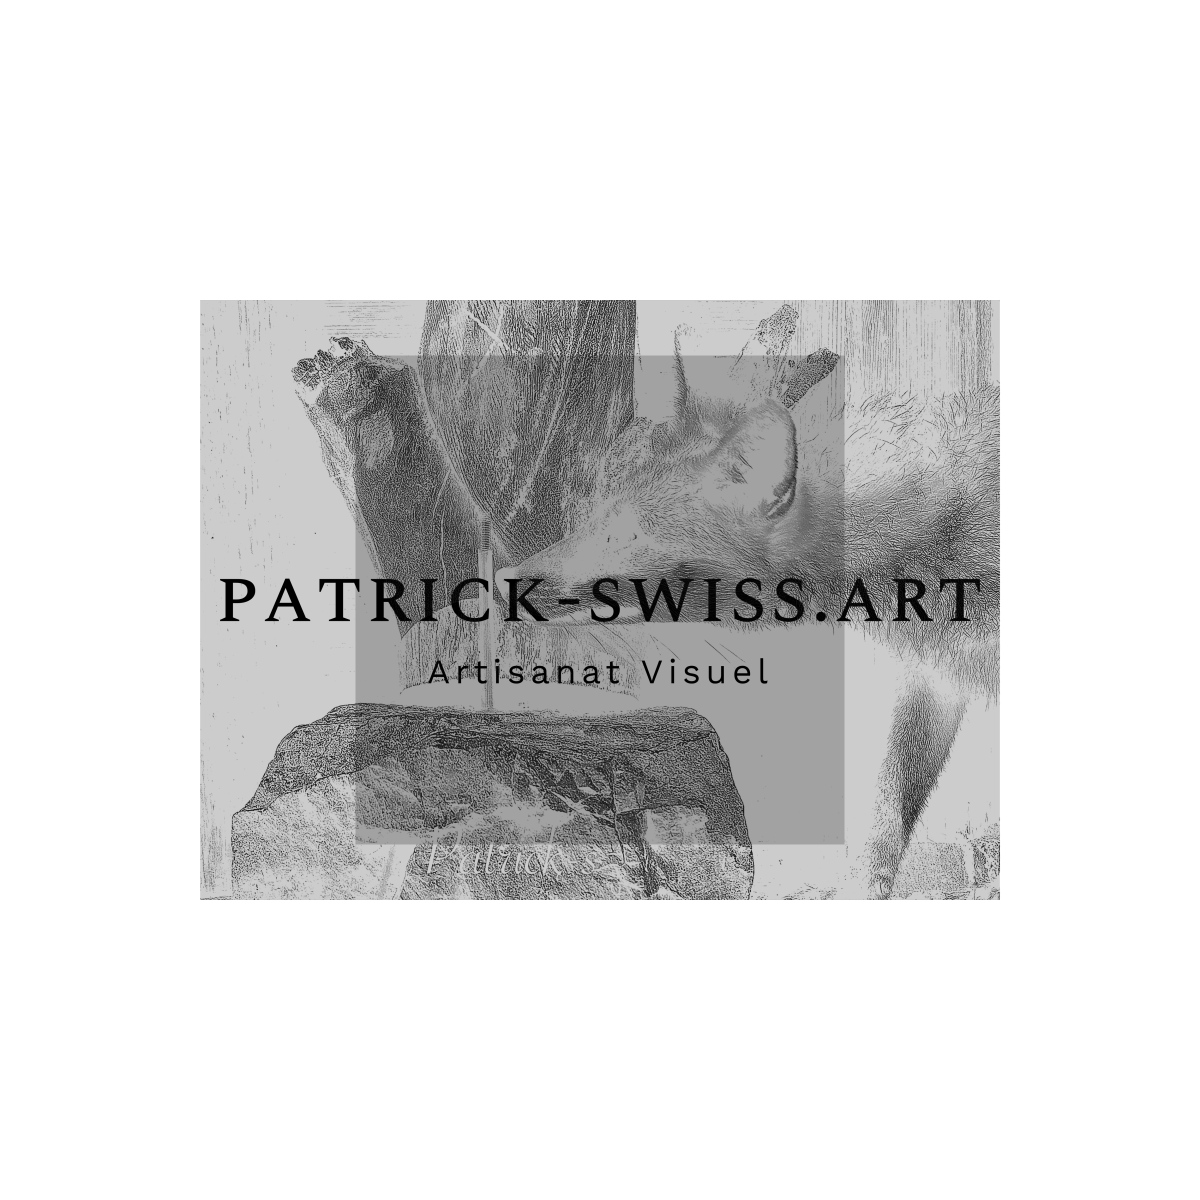 Patrick-swiss.art By Patrick Sulliger